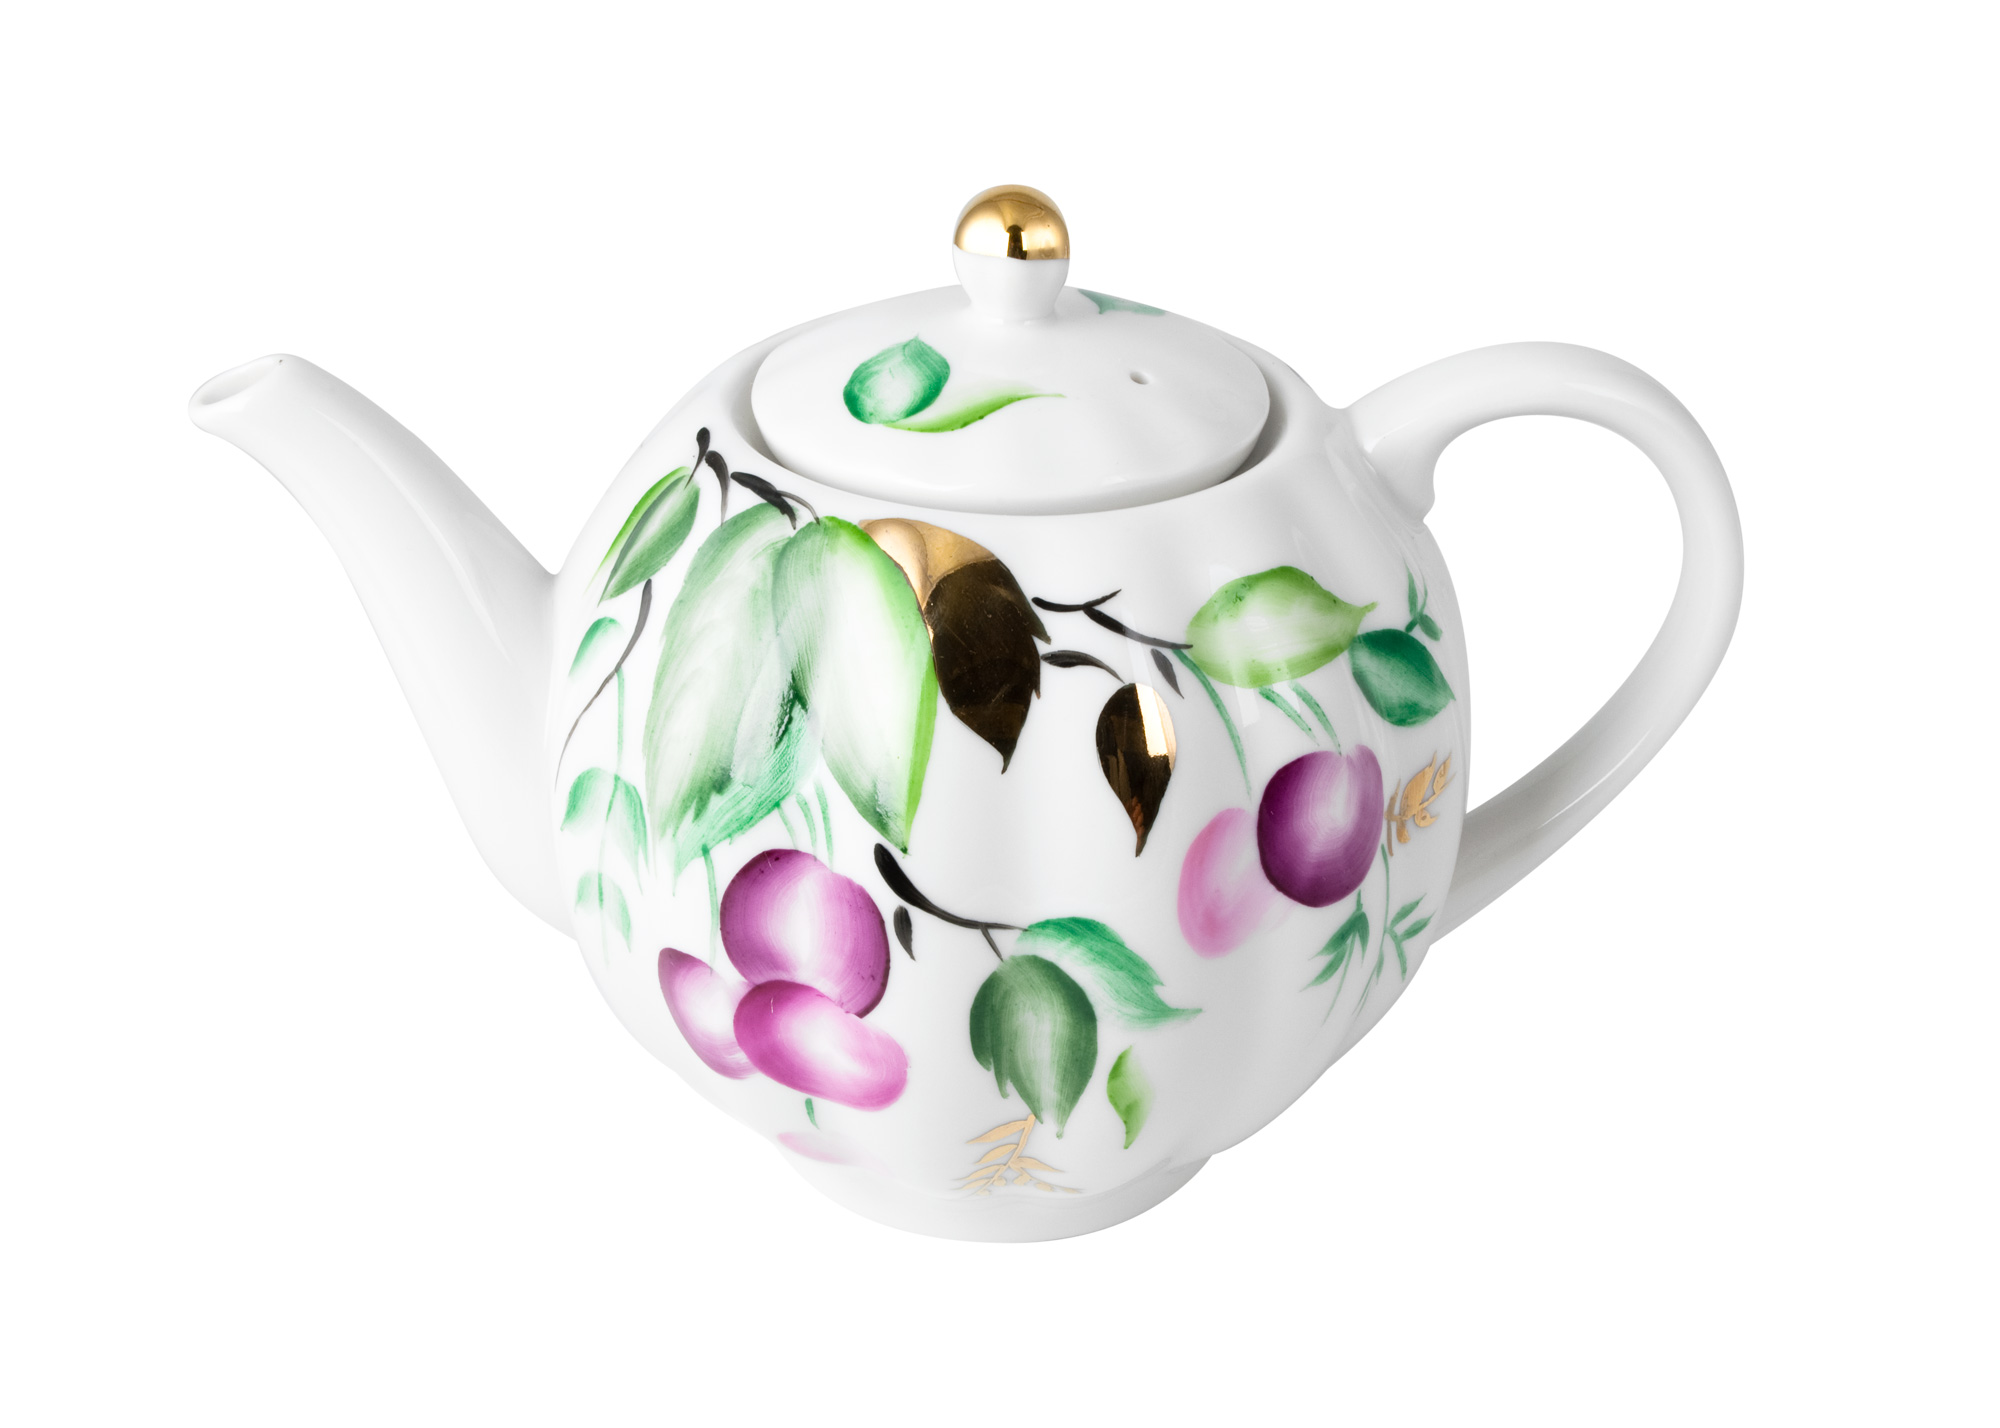 Buy Cherry Teapot, 3 cup at GoldenCockerel.com